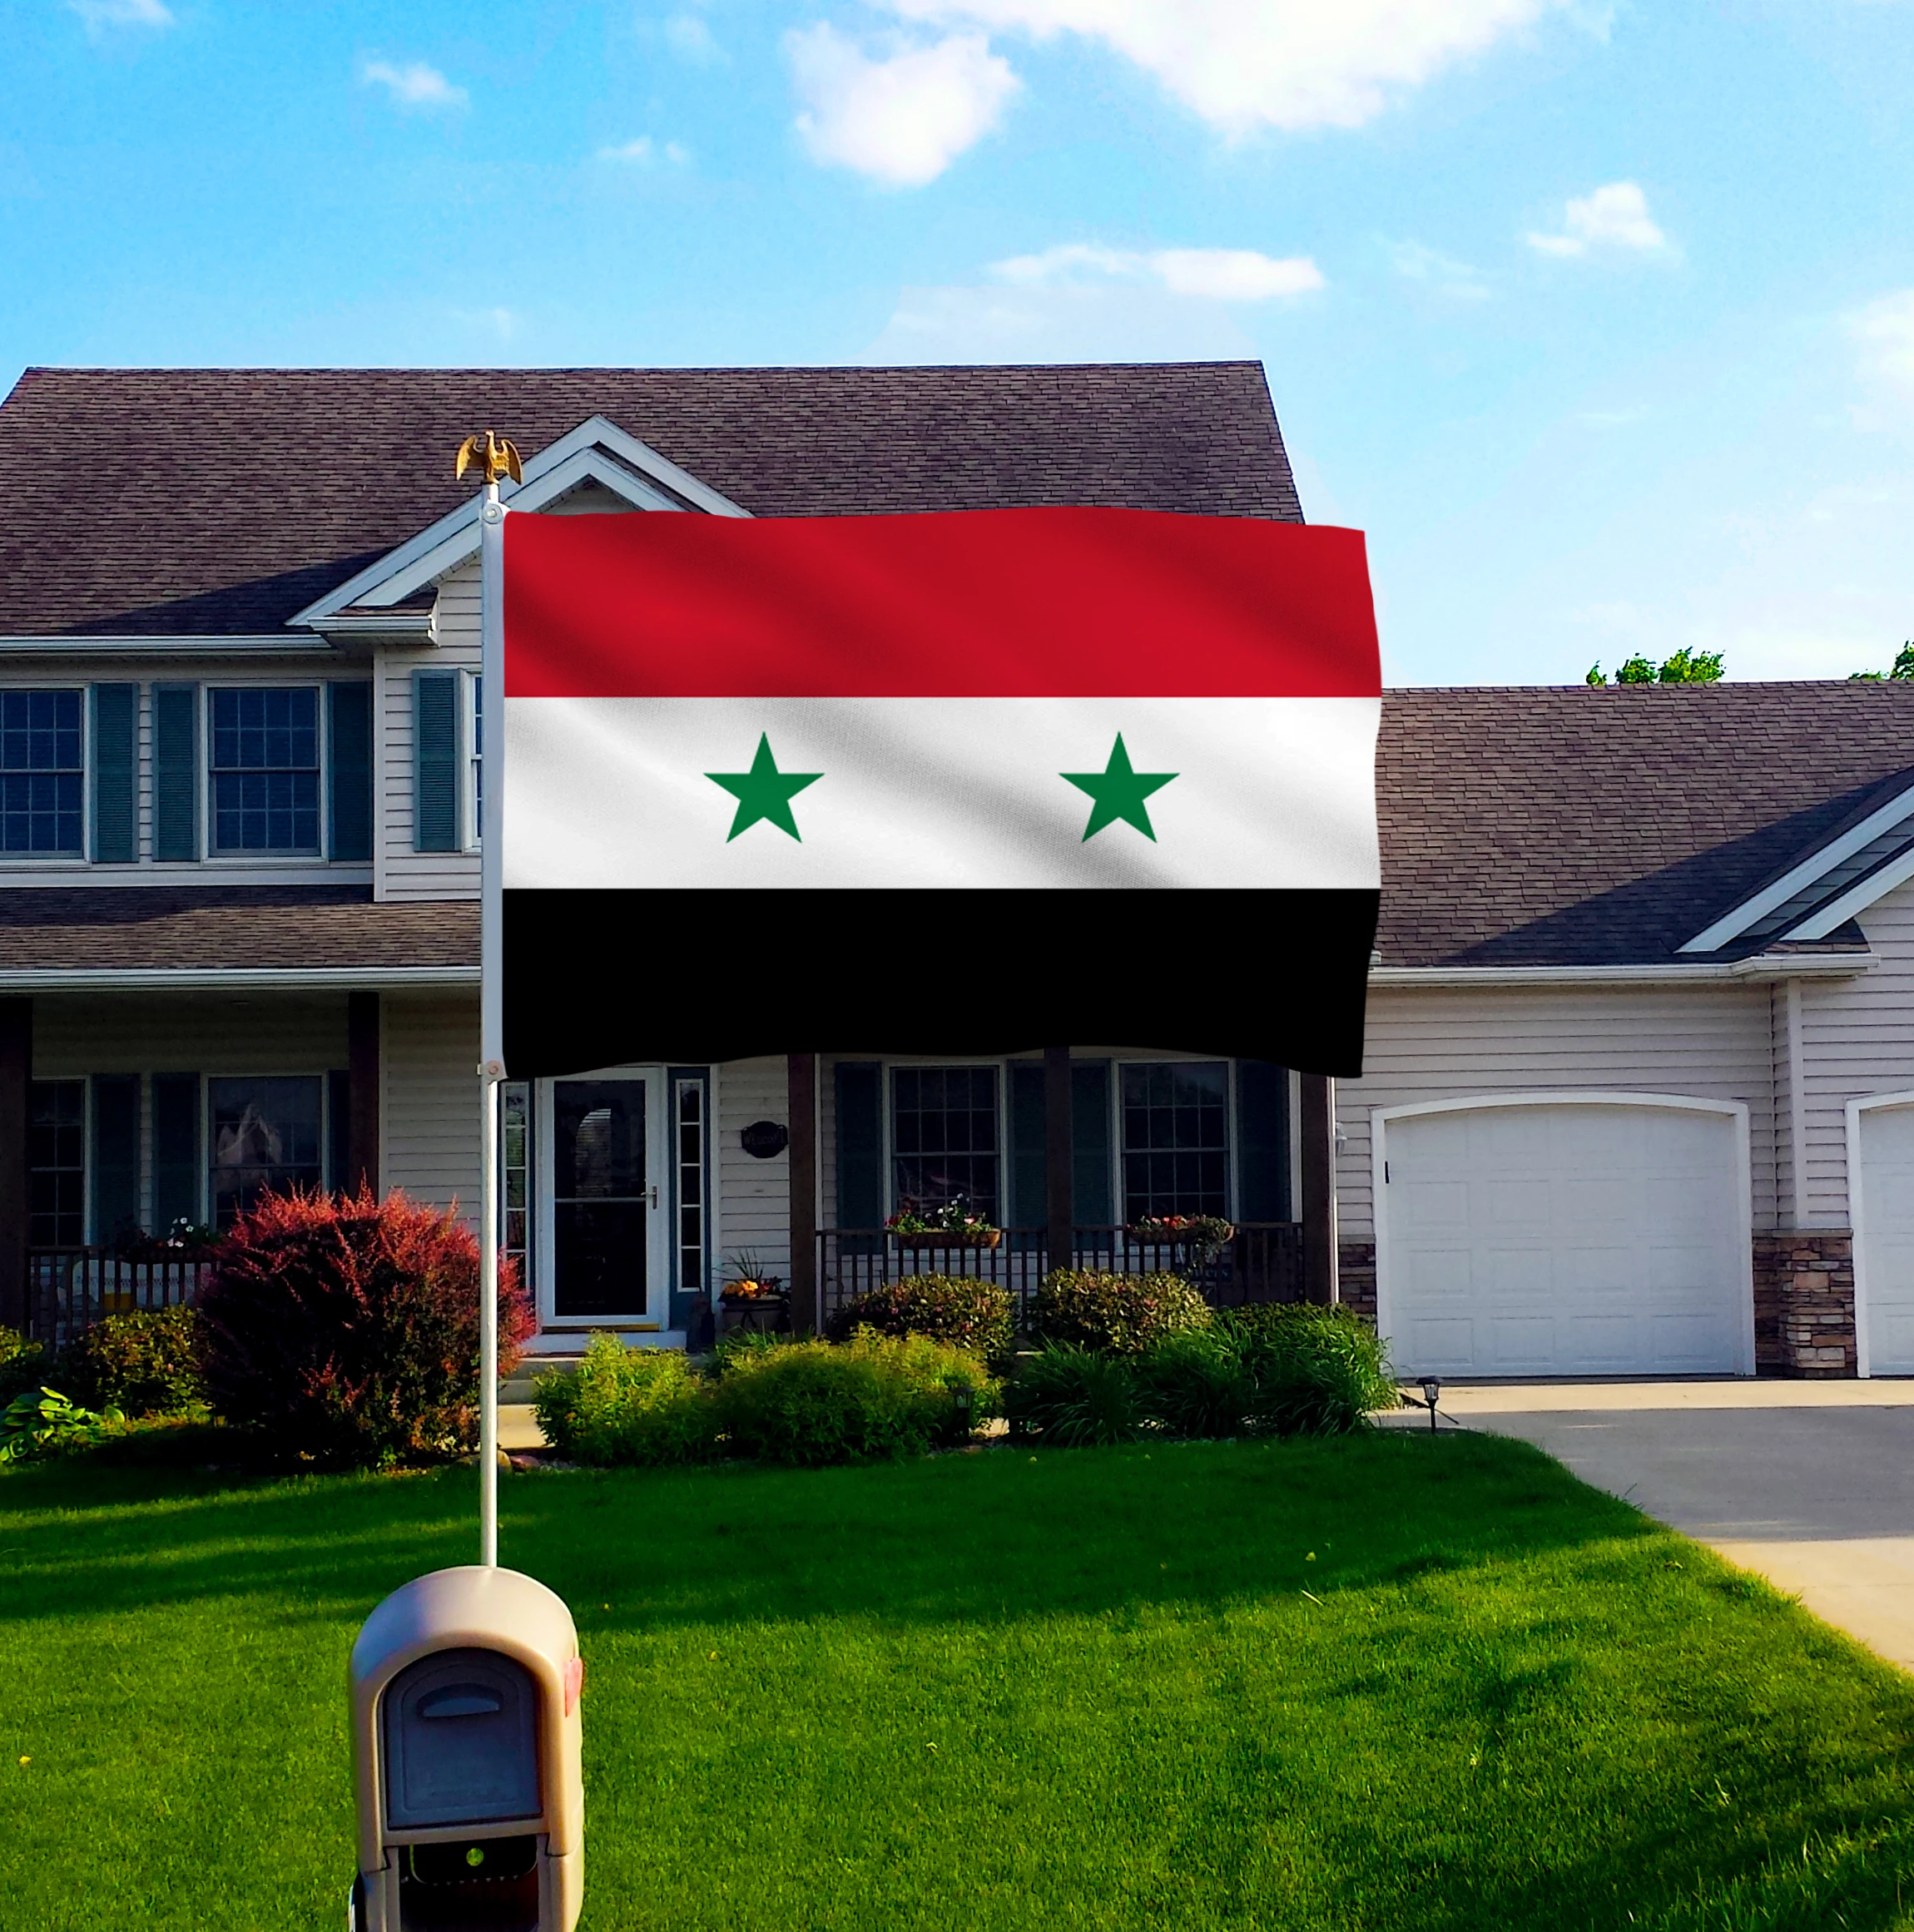 Двухзвездный сирийский флаг 90x150 см полиэстер флаг 2 стороны печати